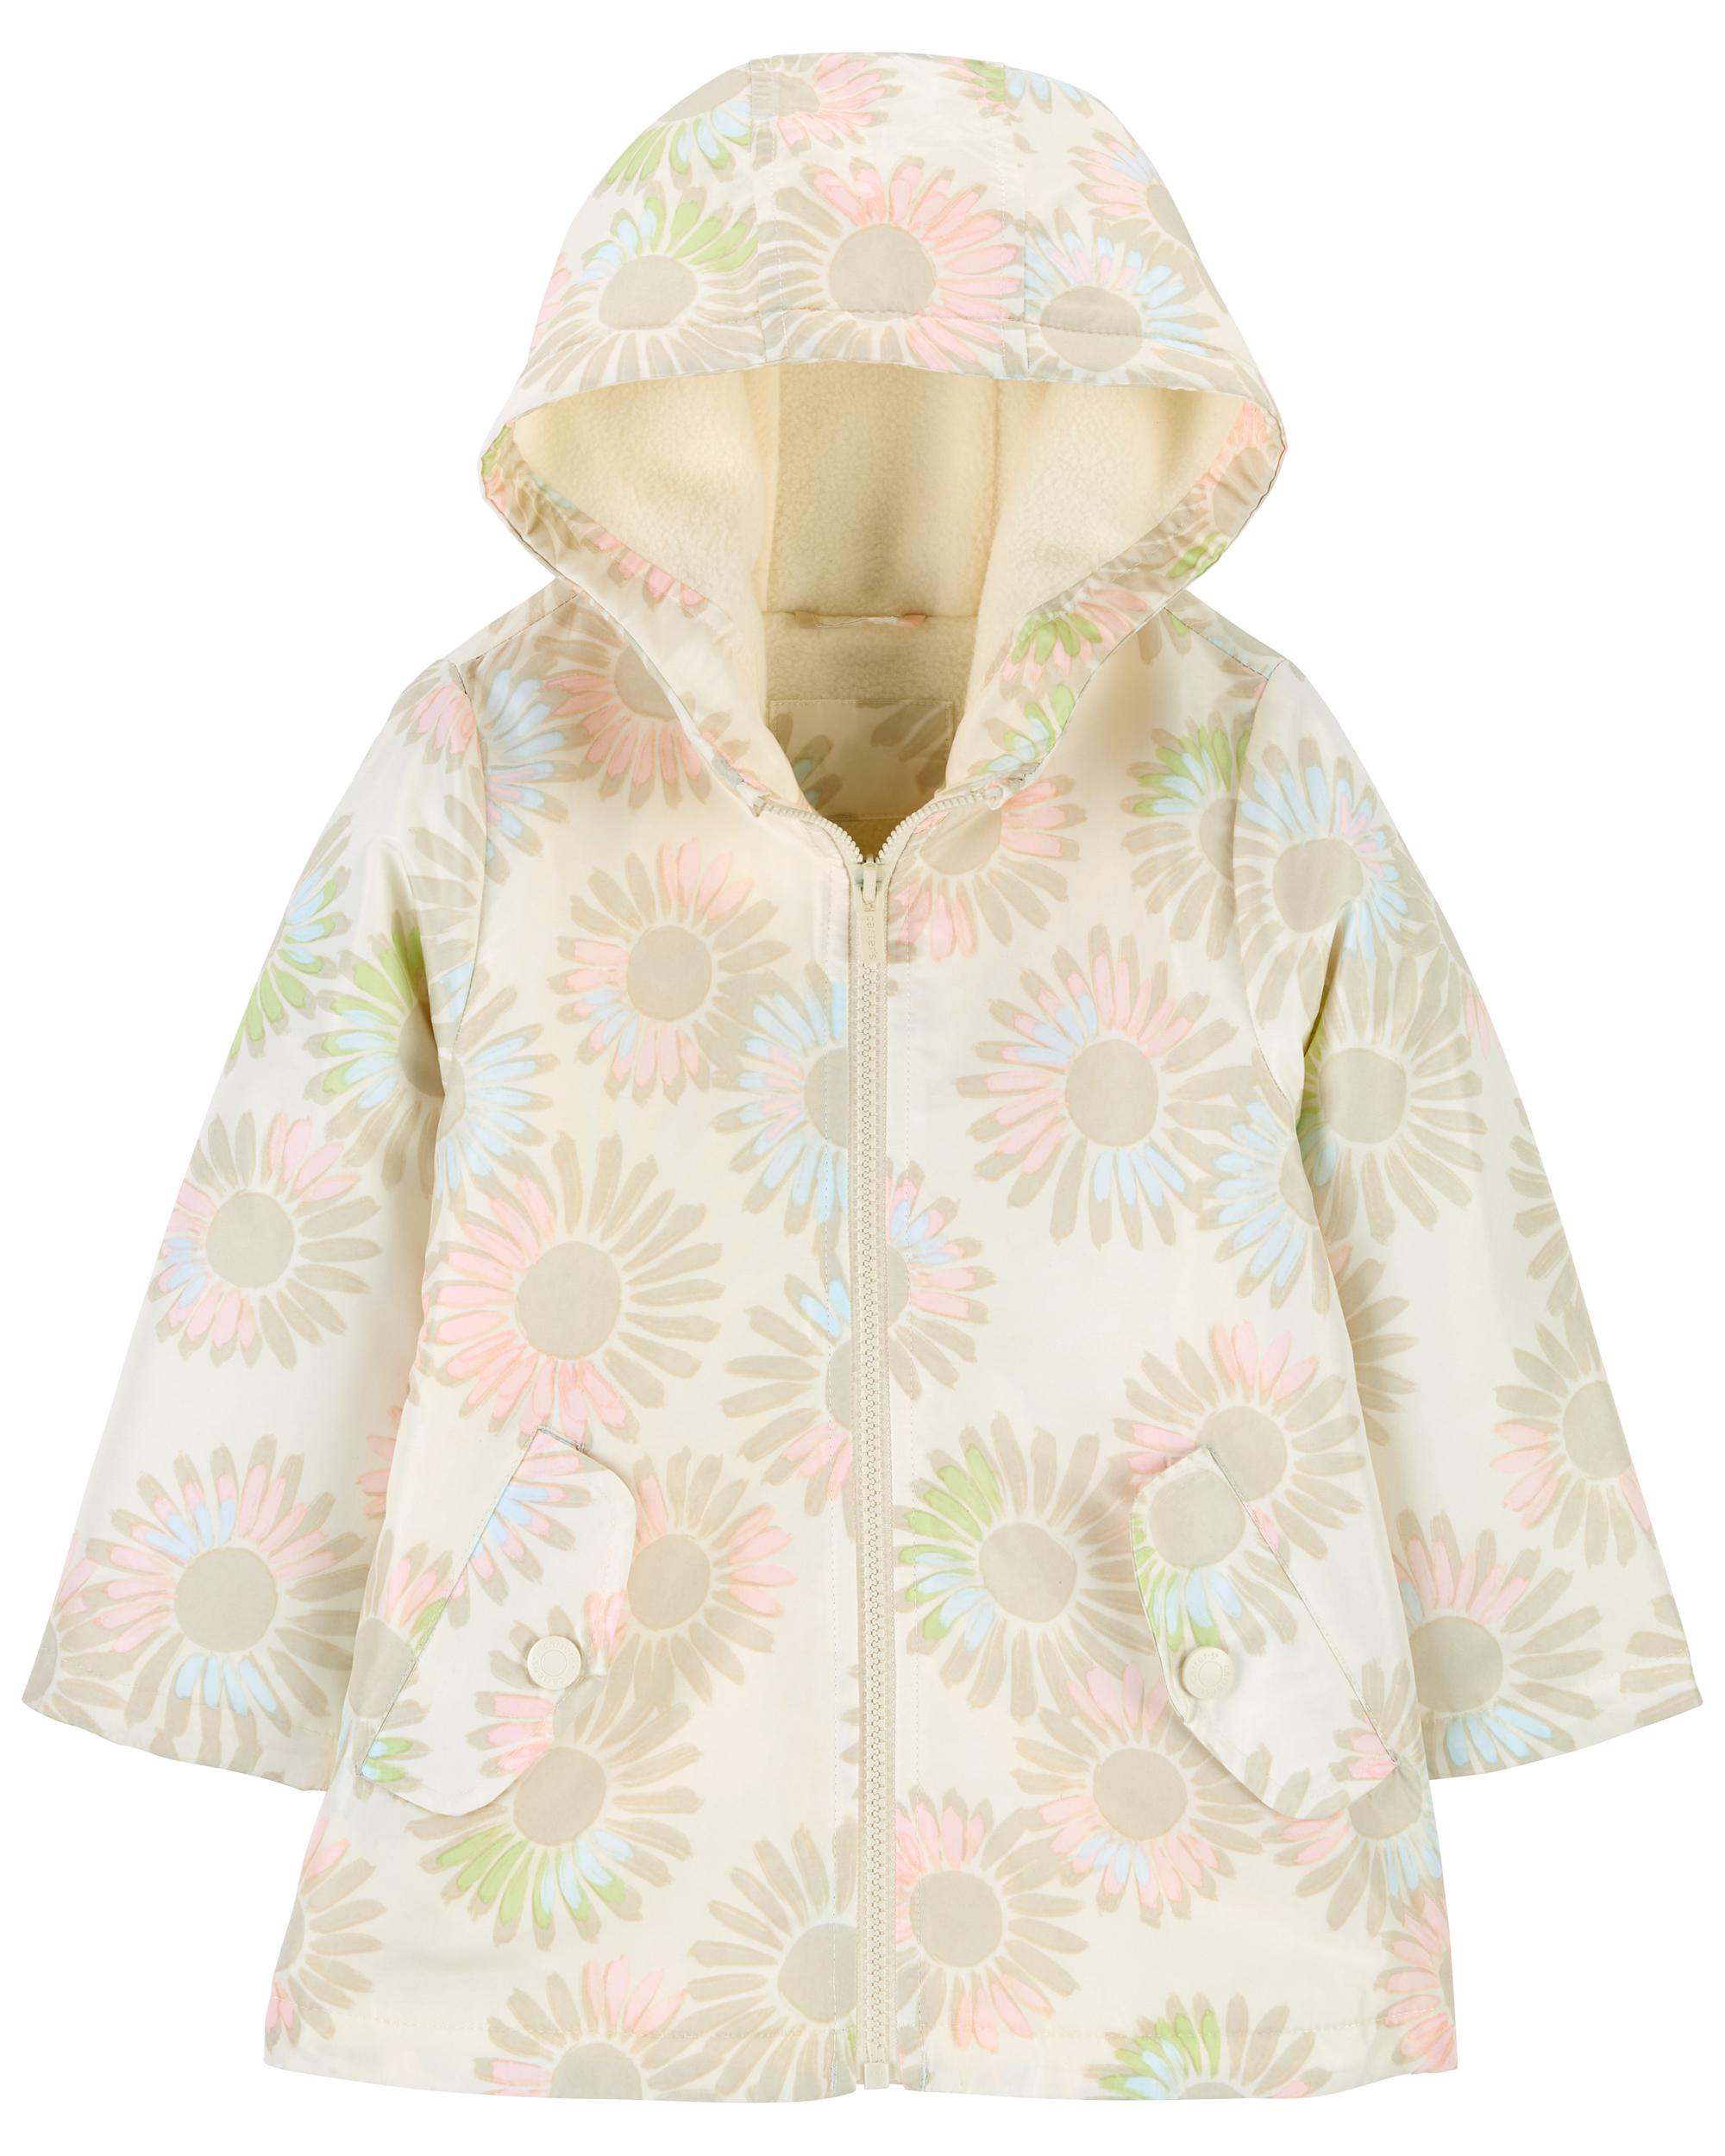 Kid Fleece-Lined Printed Rain Jacket